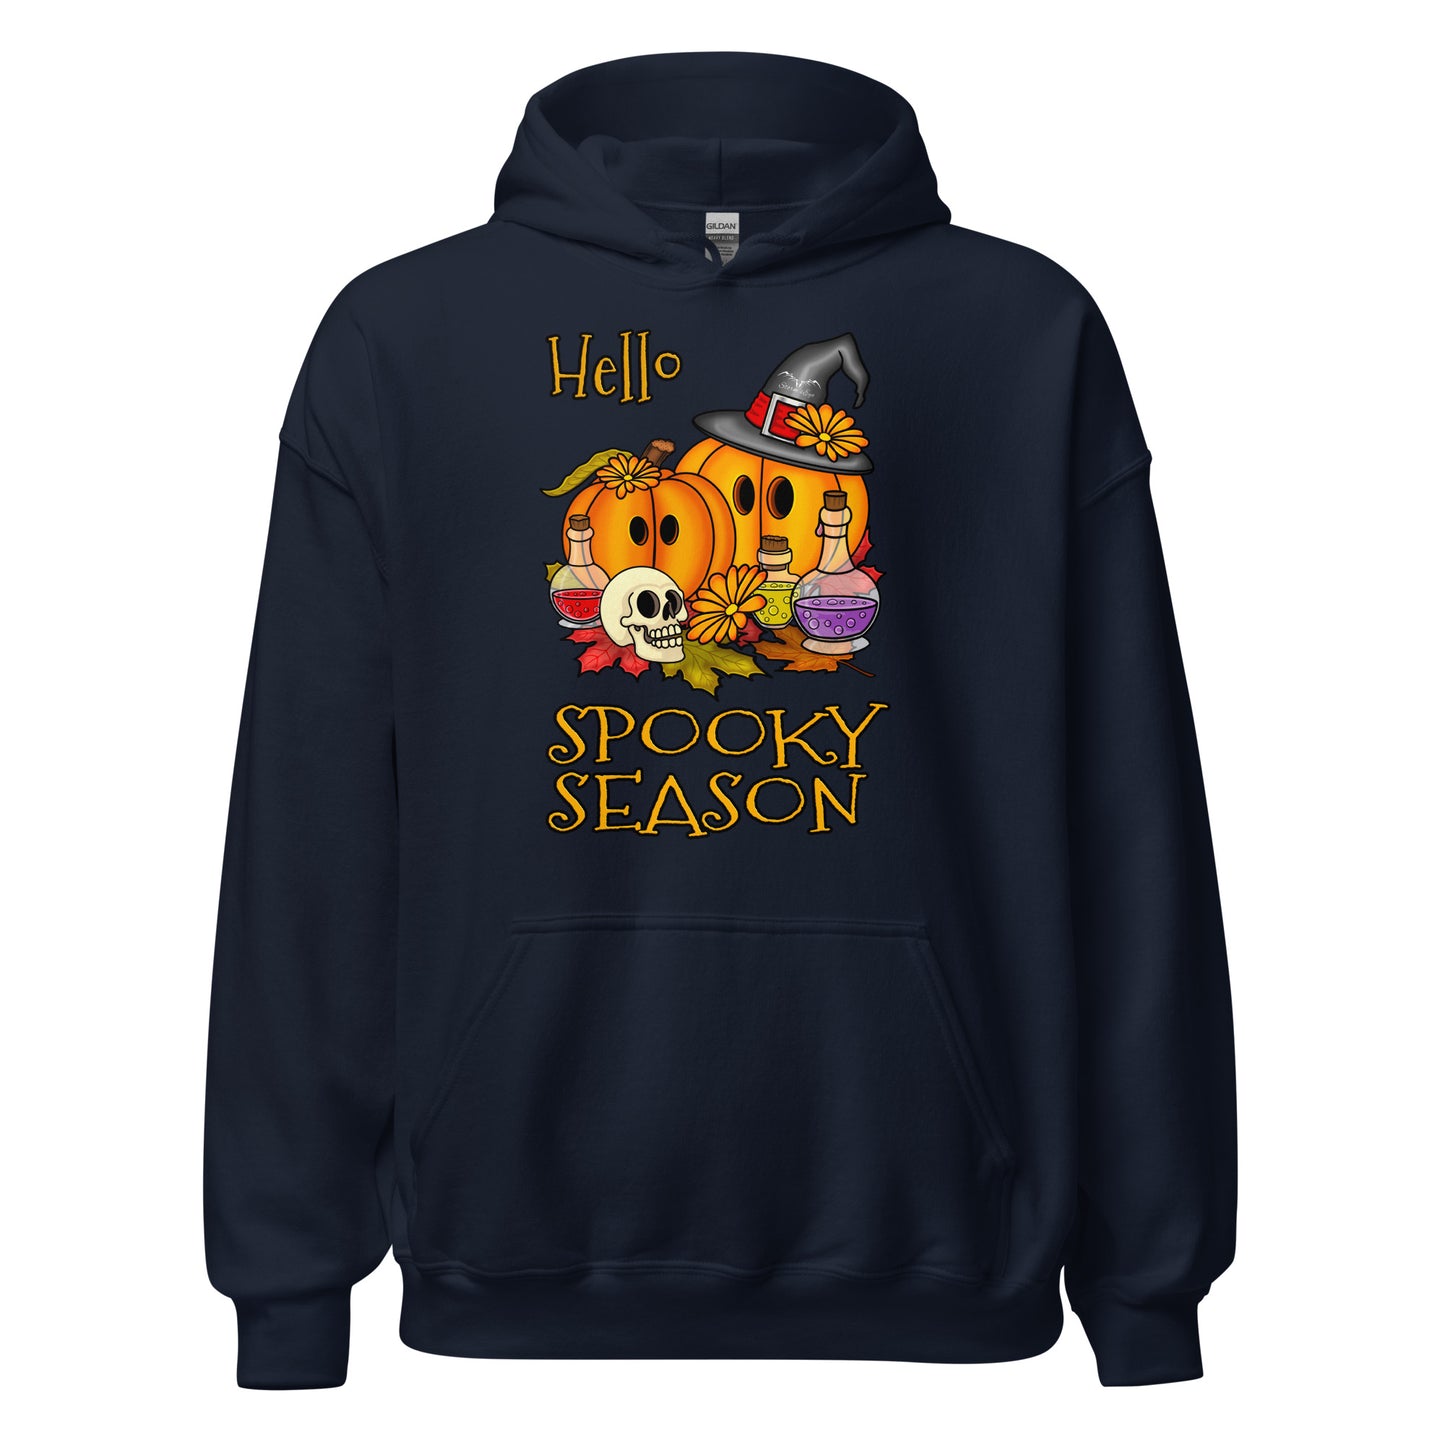 stormseye design hello spooky season hoodie flat view navy blue